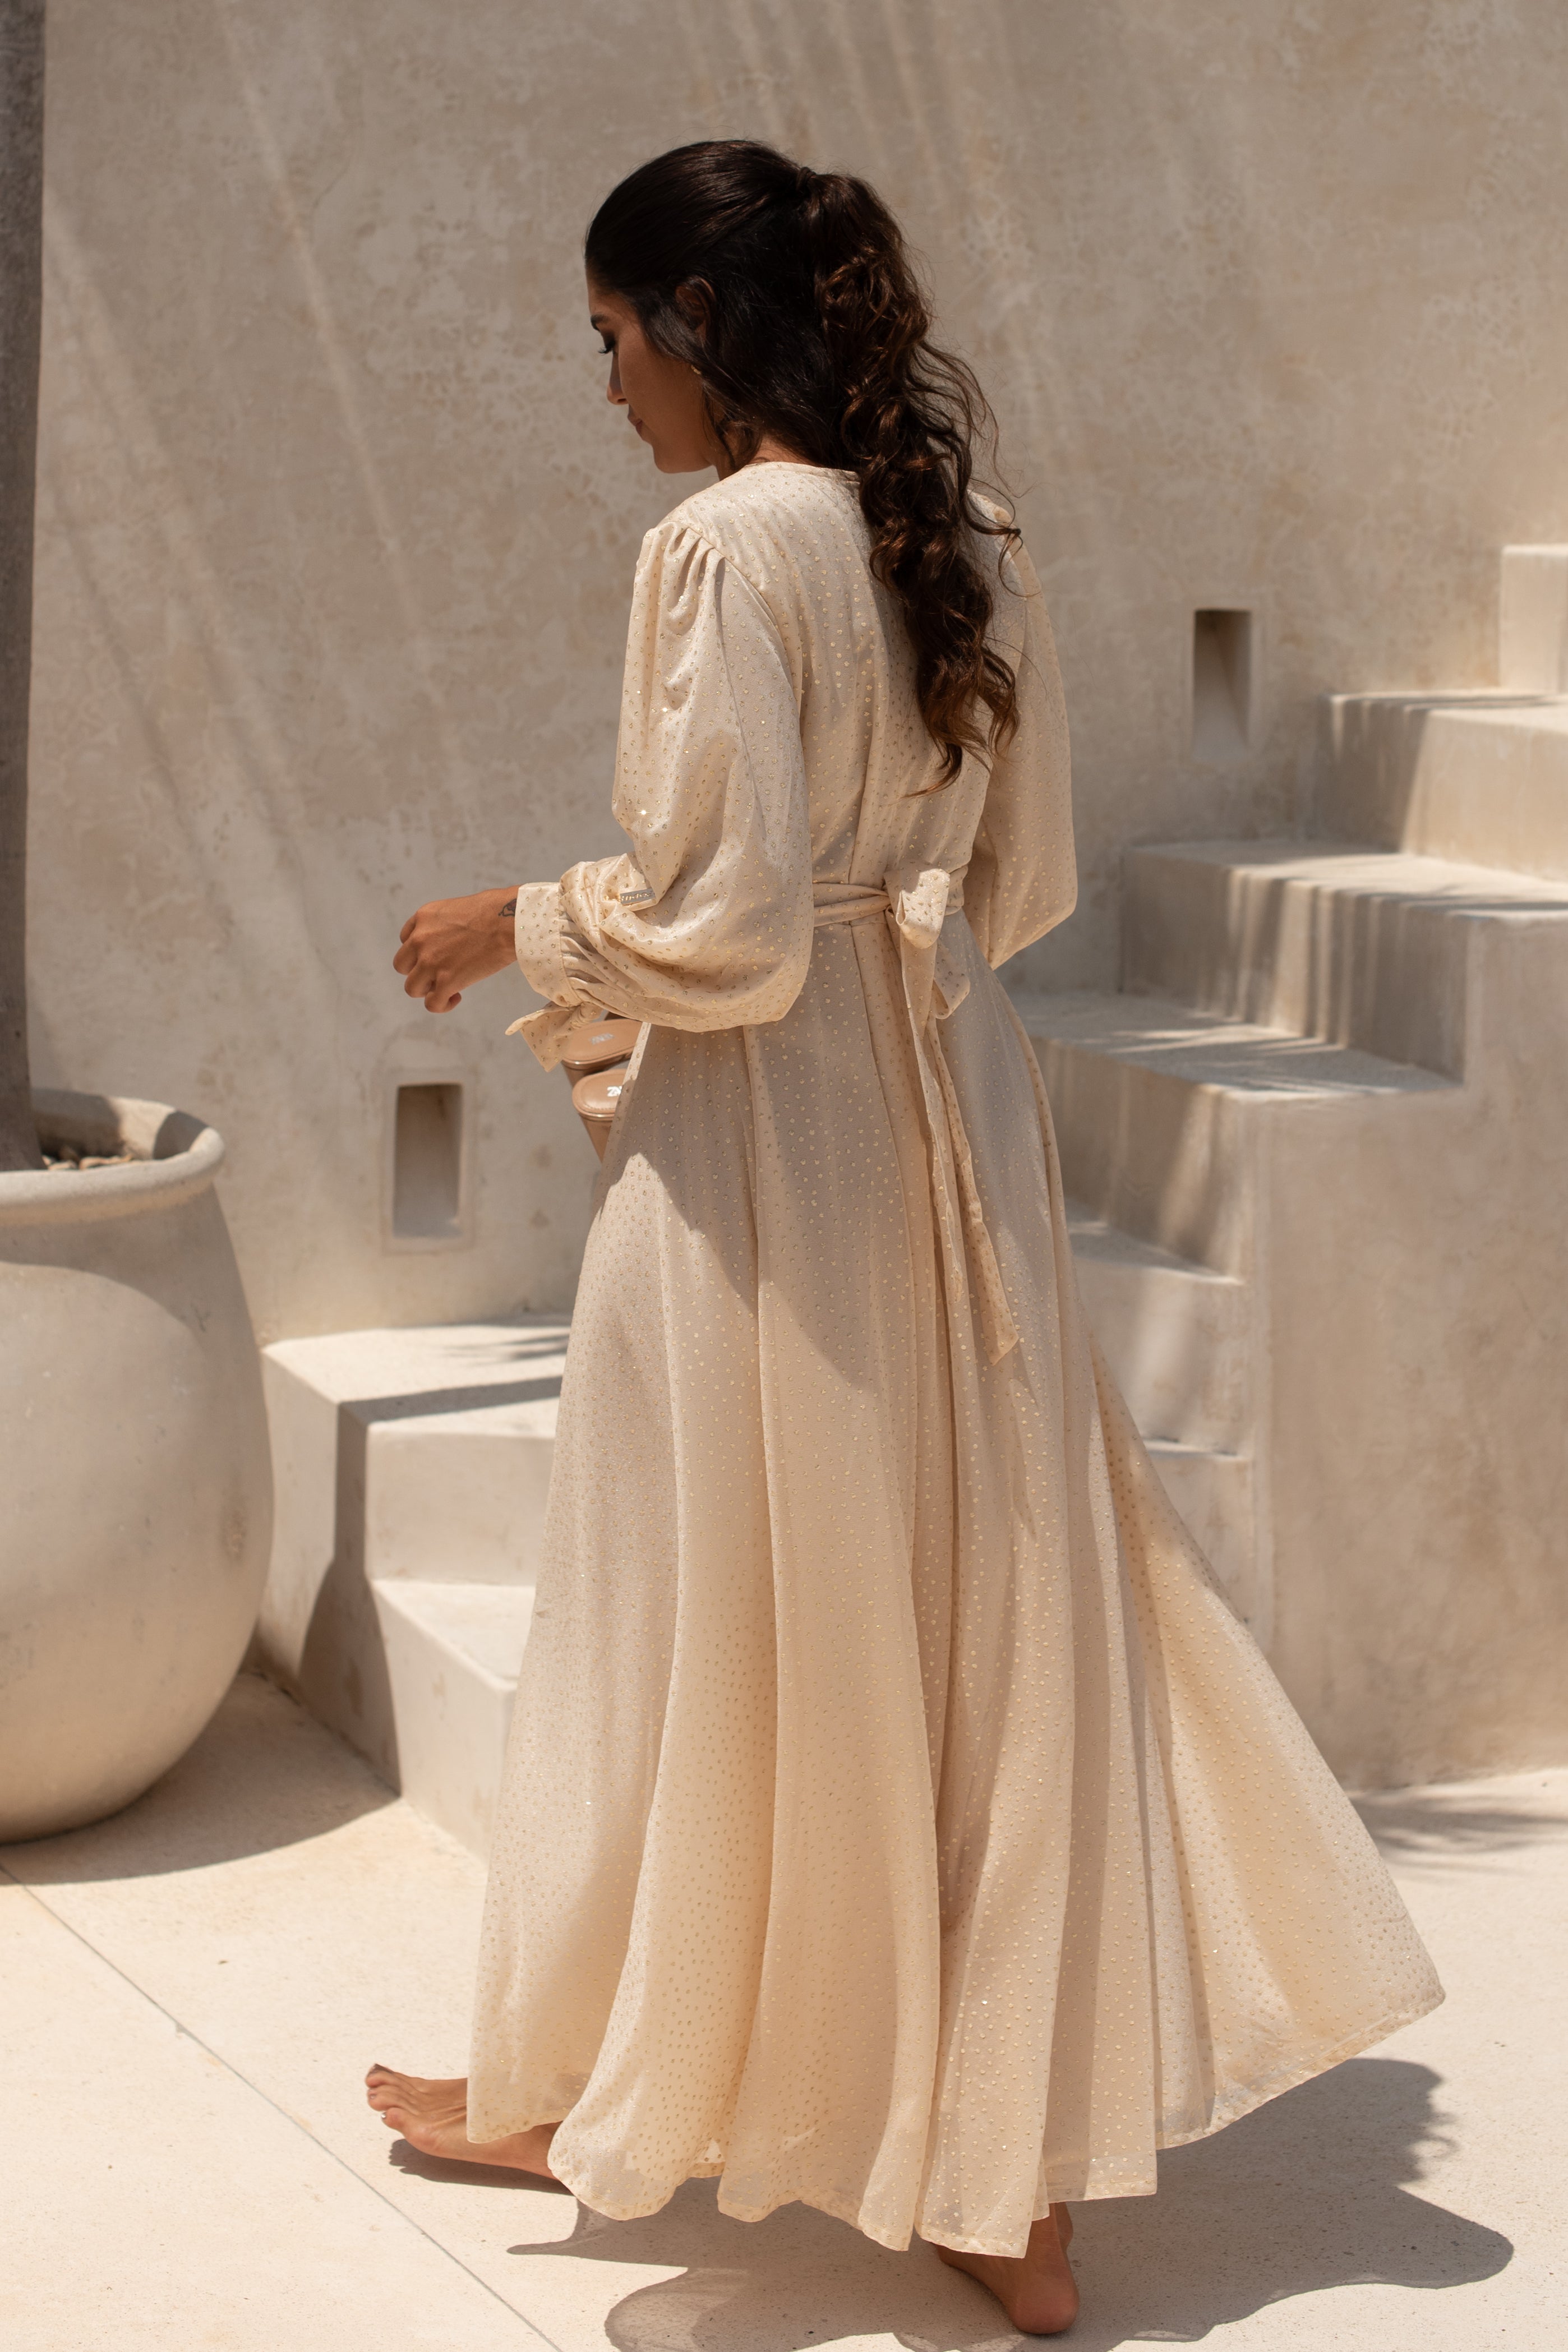 Glittering Sand dress